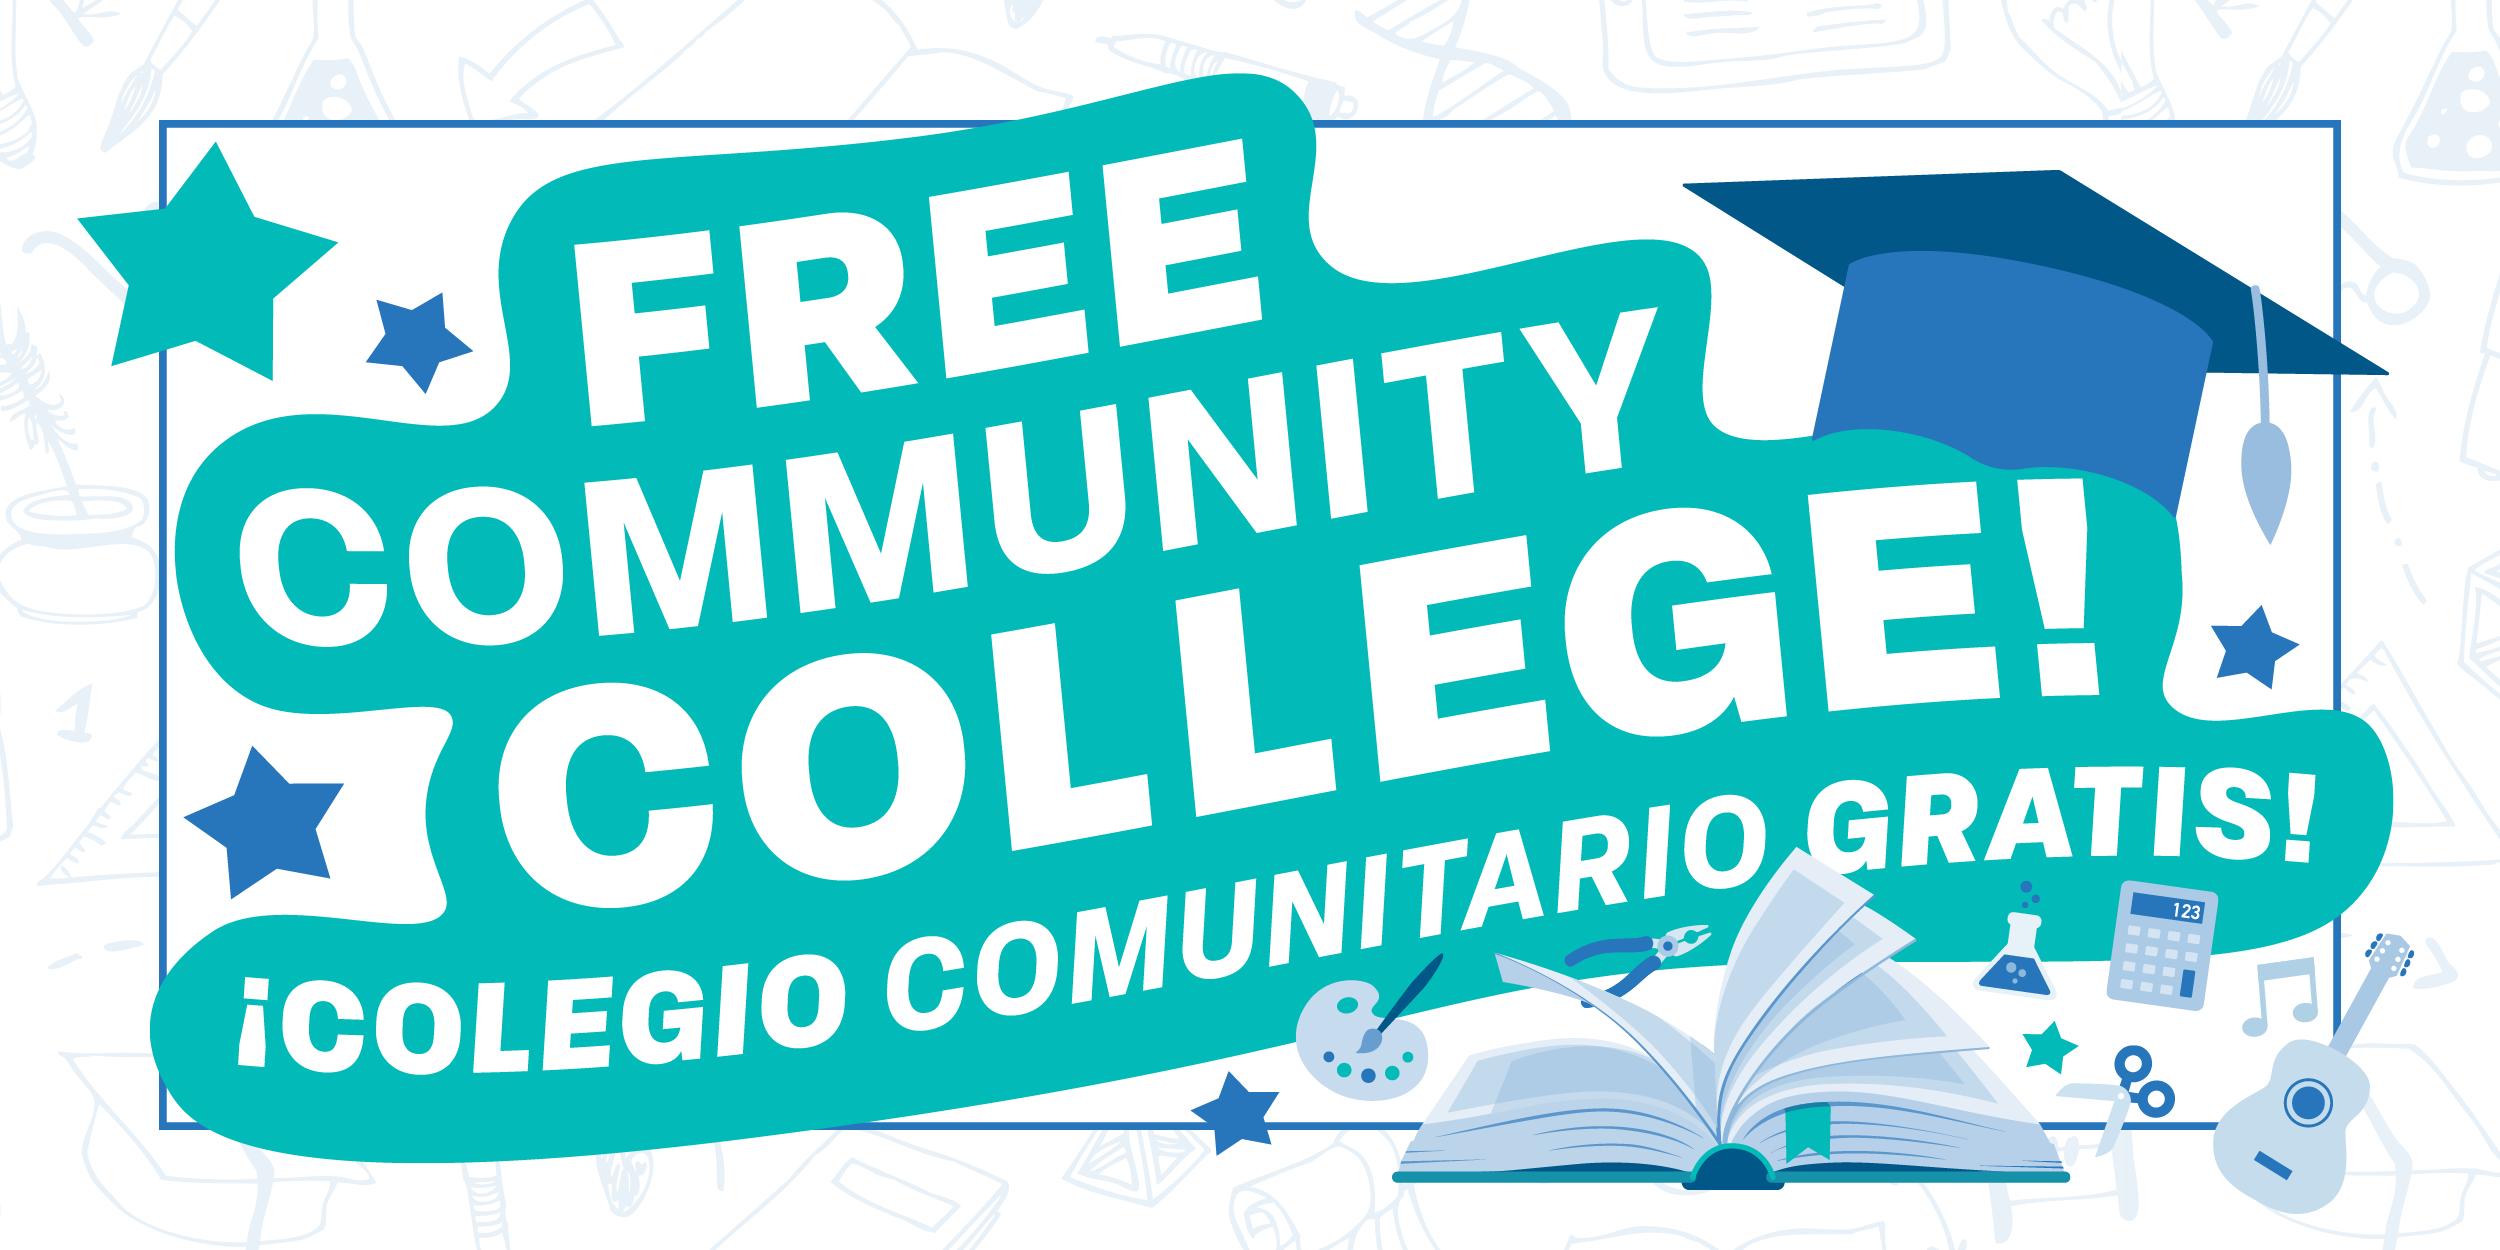 Free Community College